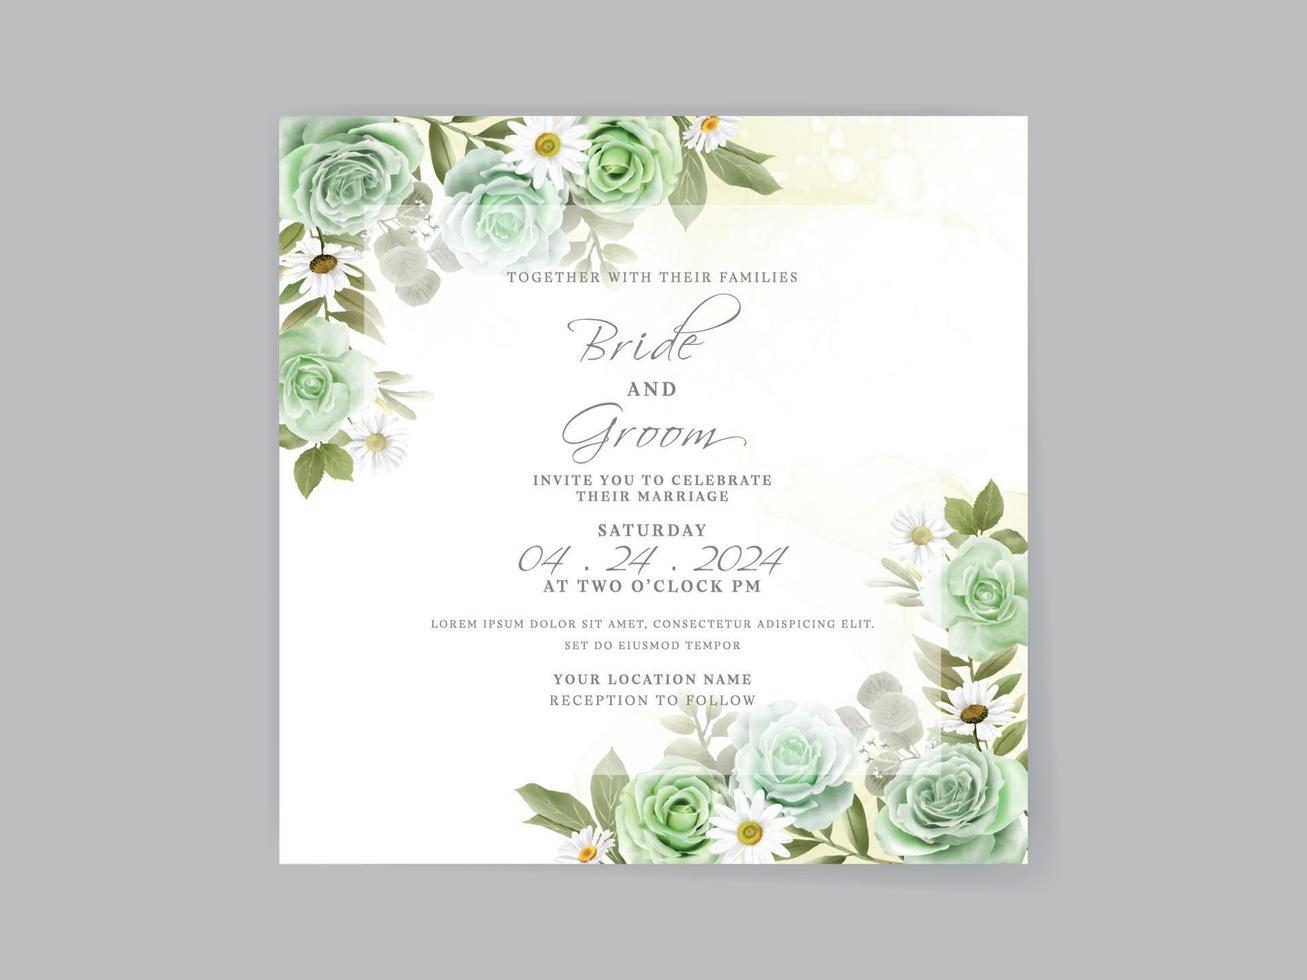 Hand drawn greenery roses wedding invitation card vector